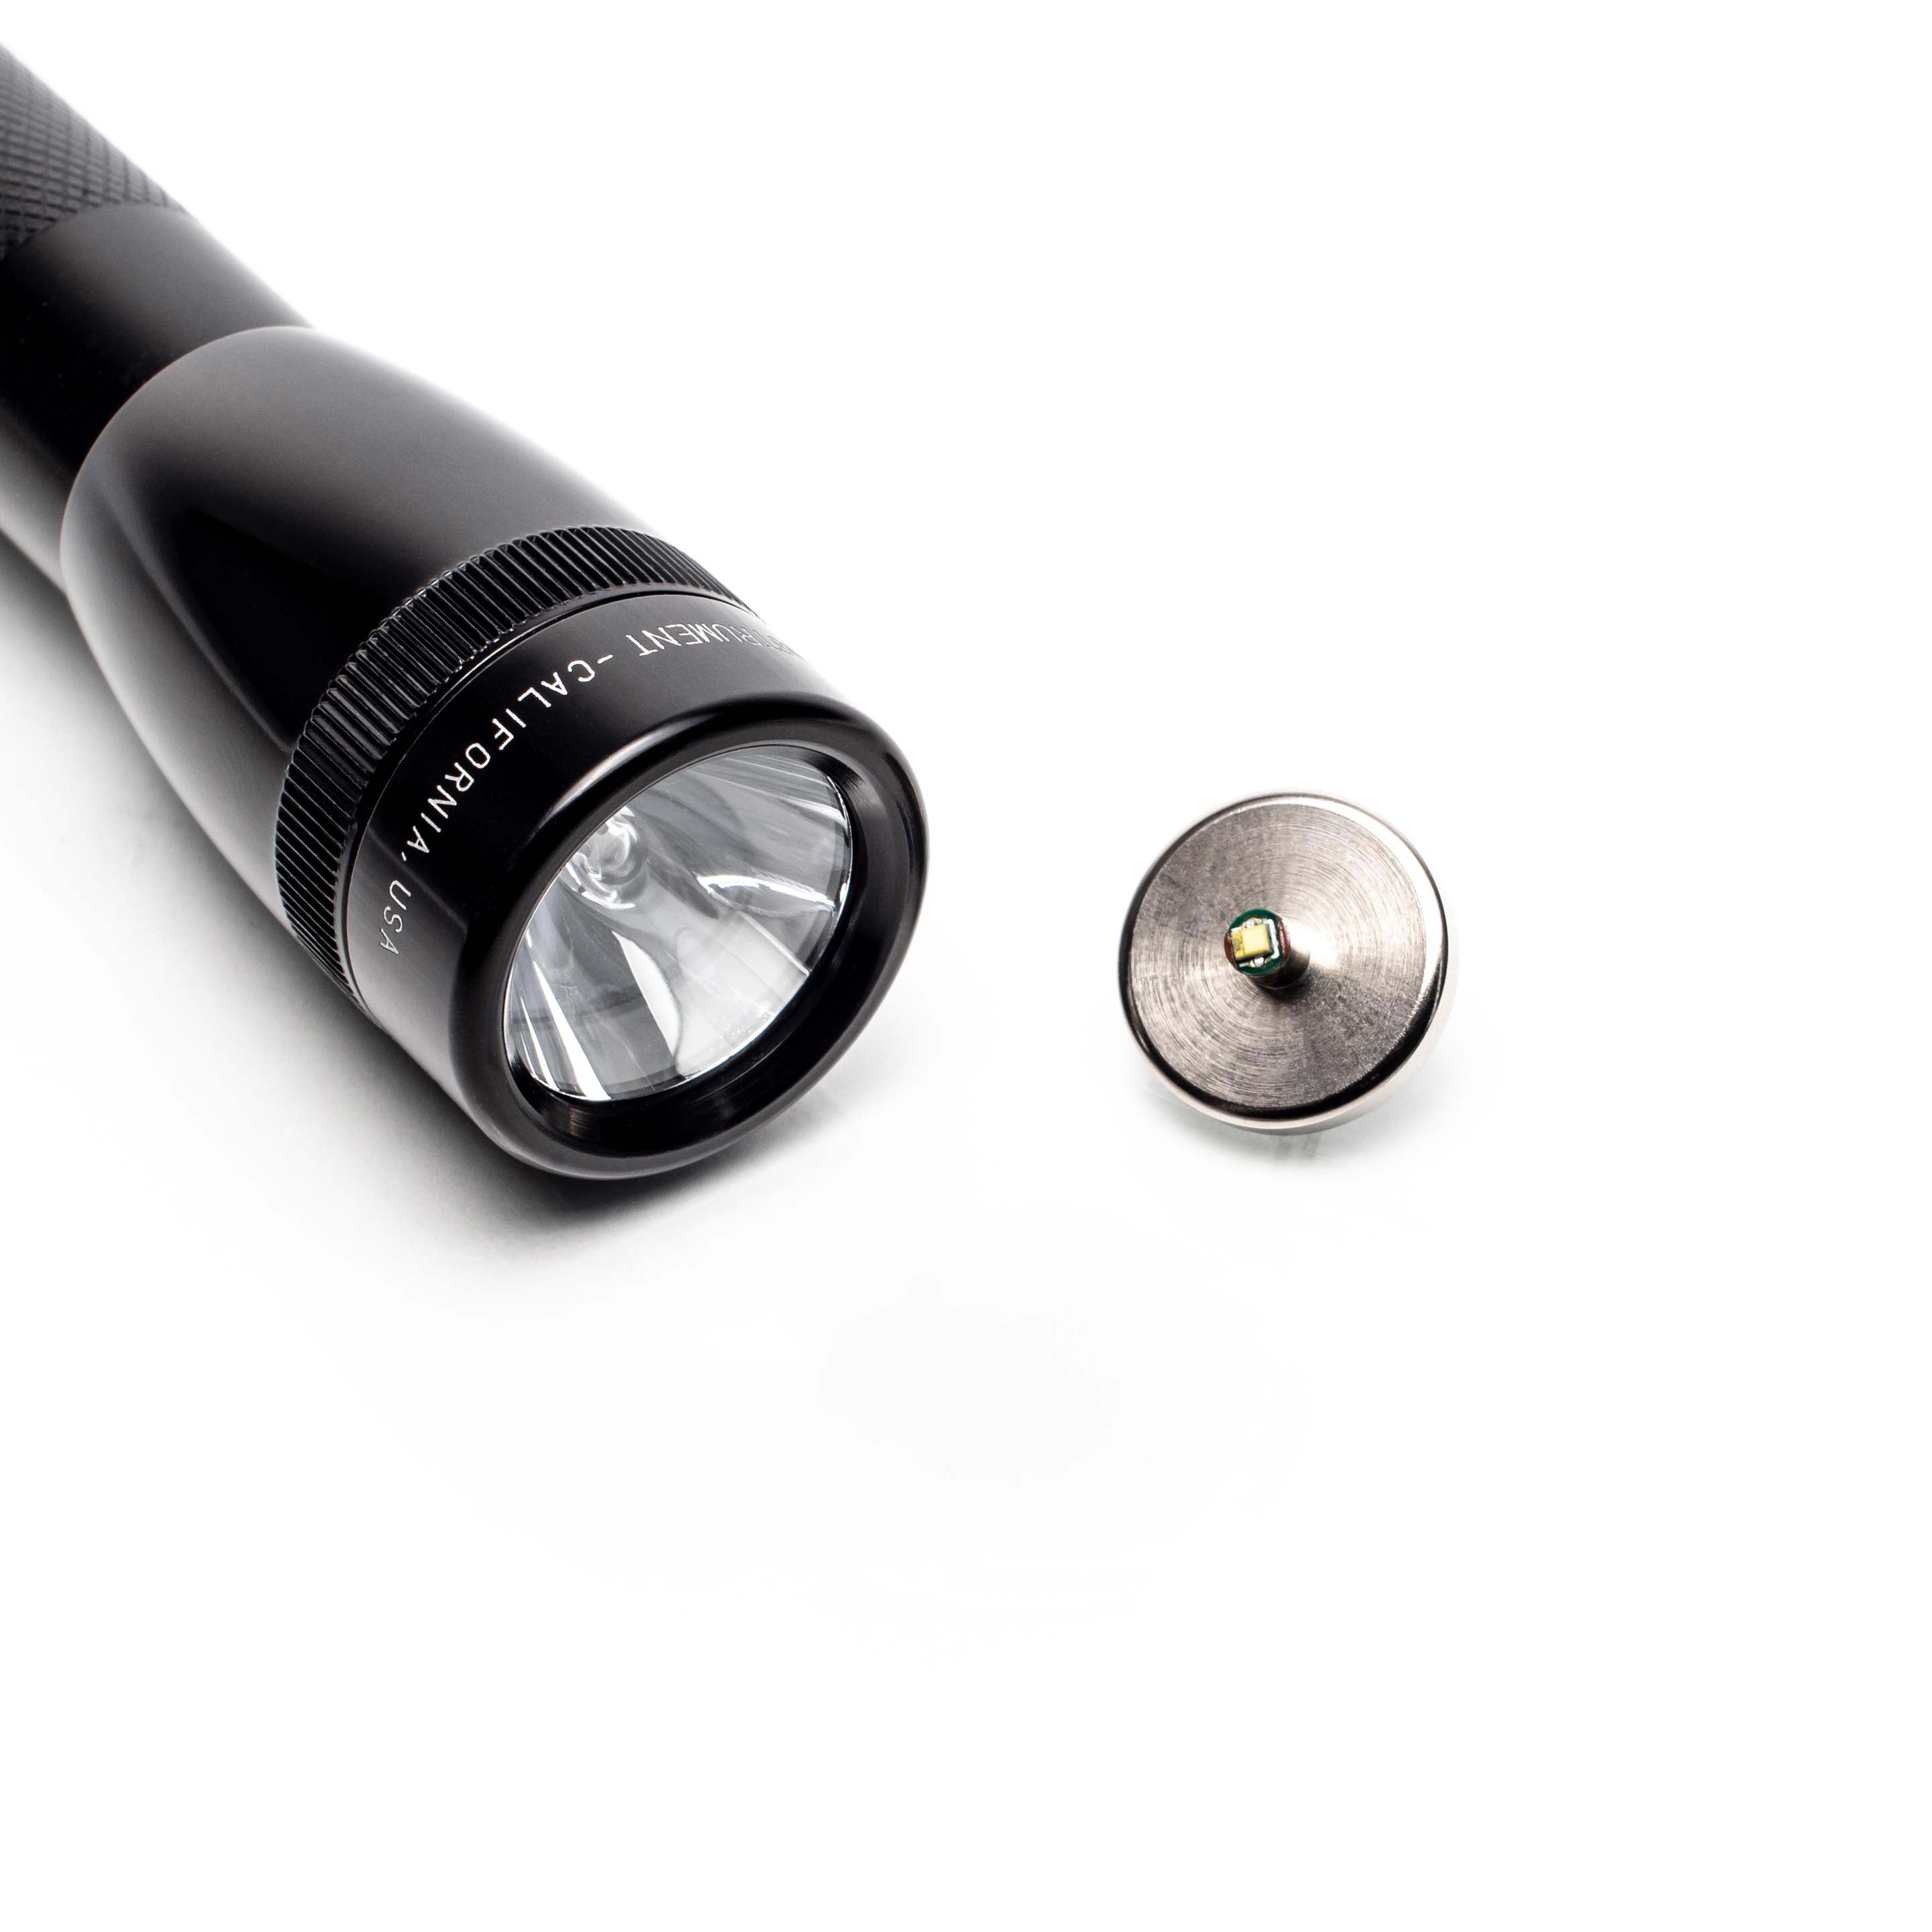 bi-pin led upgrade replacement conversion retrofit bulb for mini 2 aaa maglite flashlight parts by litt industries